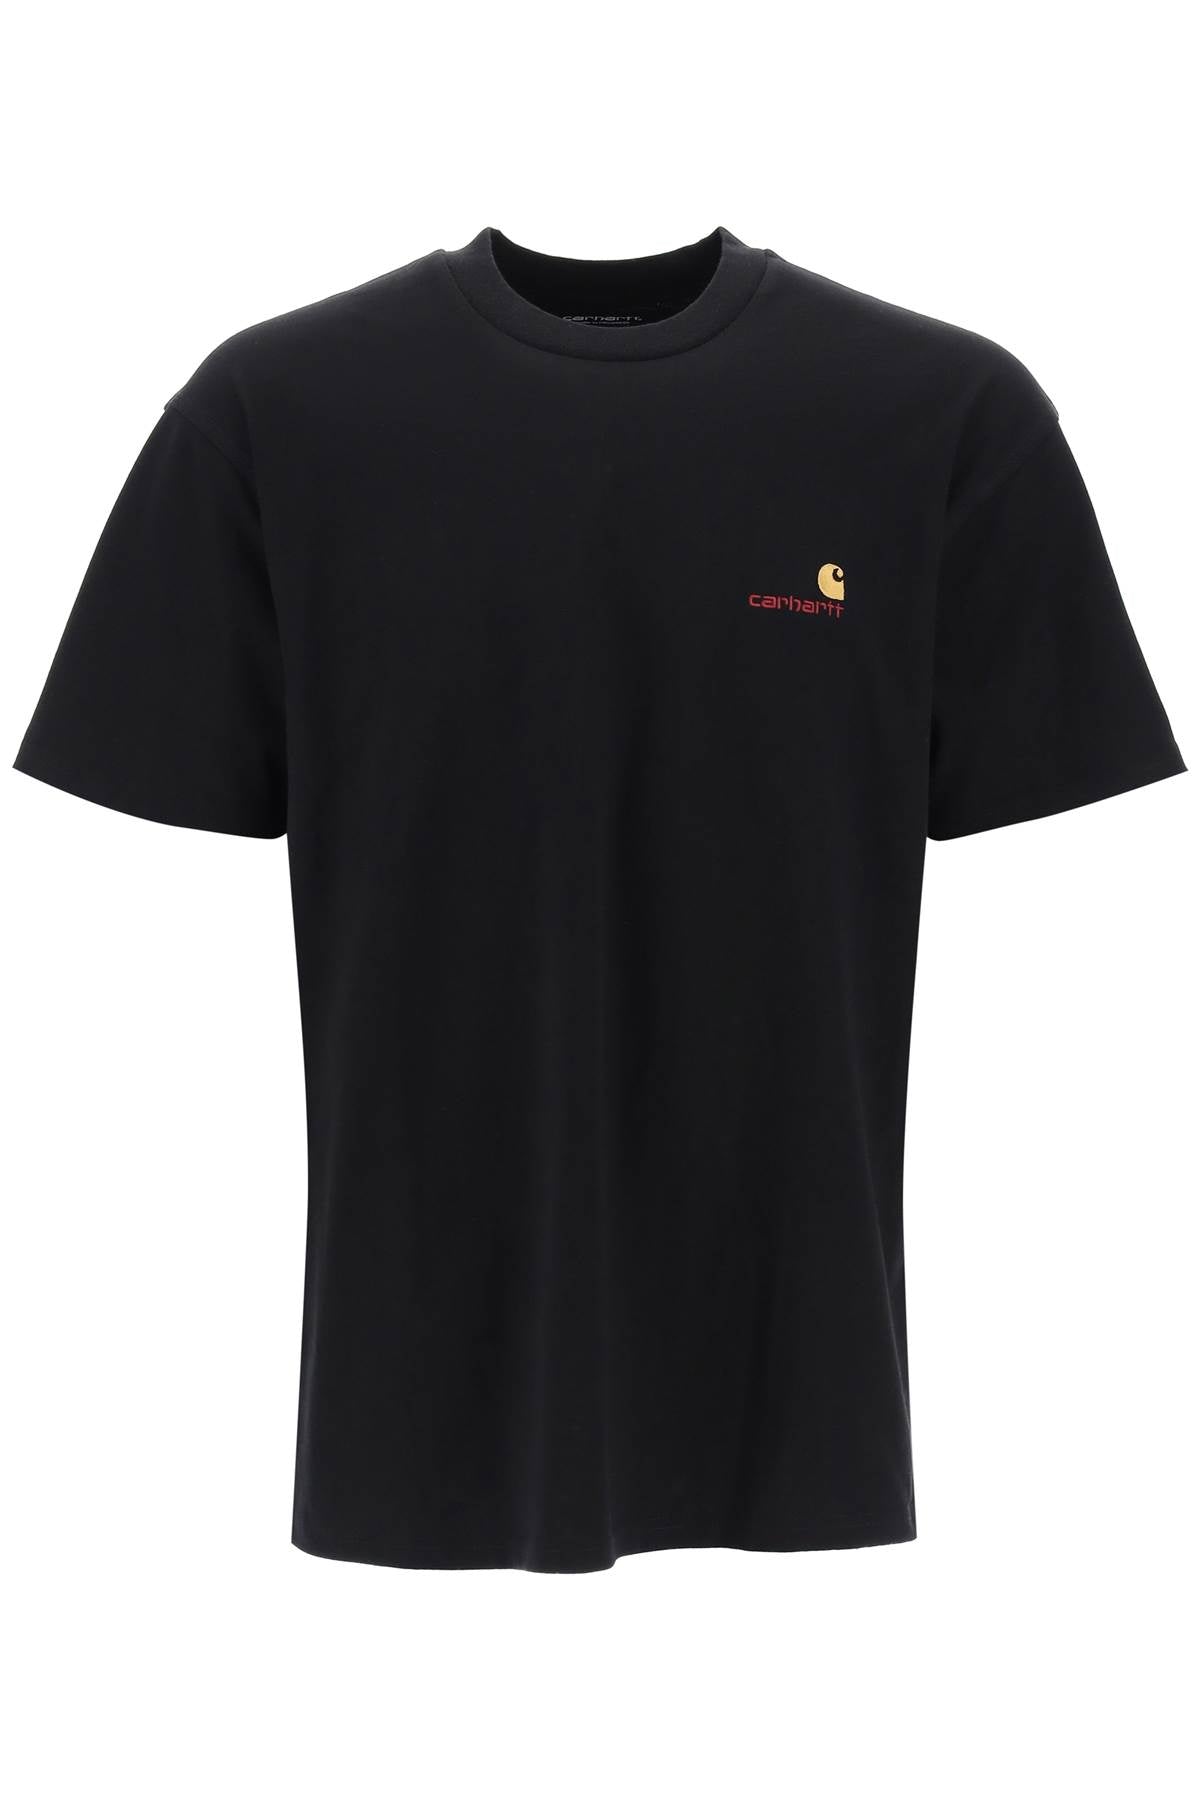 Carhartt Wip american script t-shirt - Black